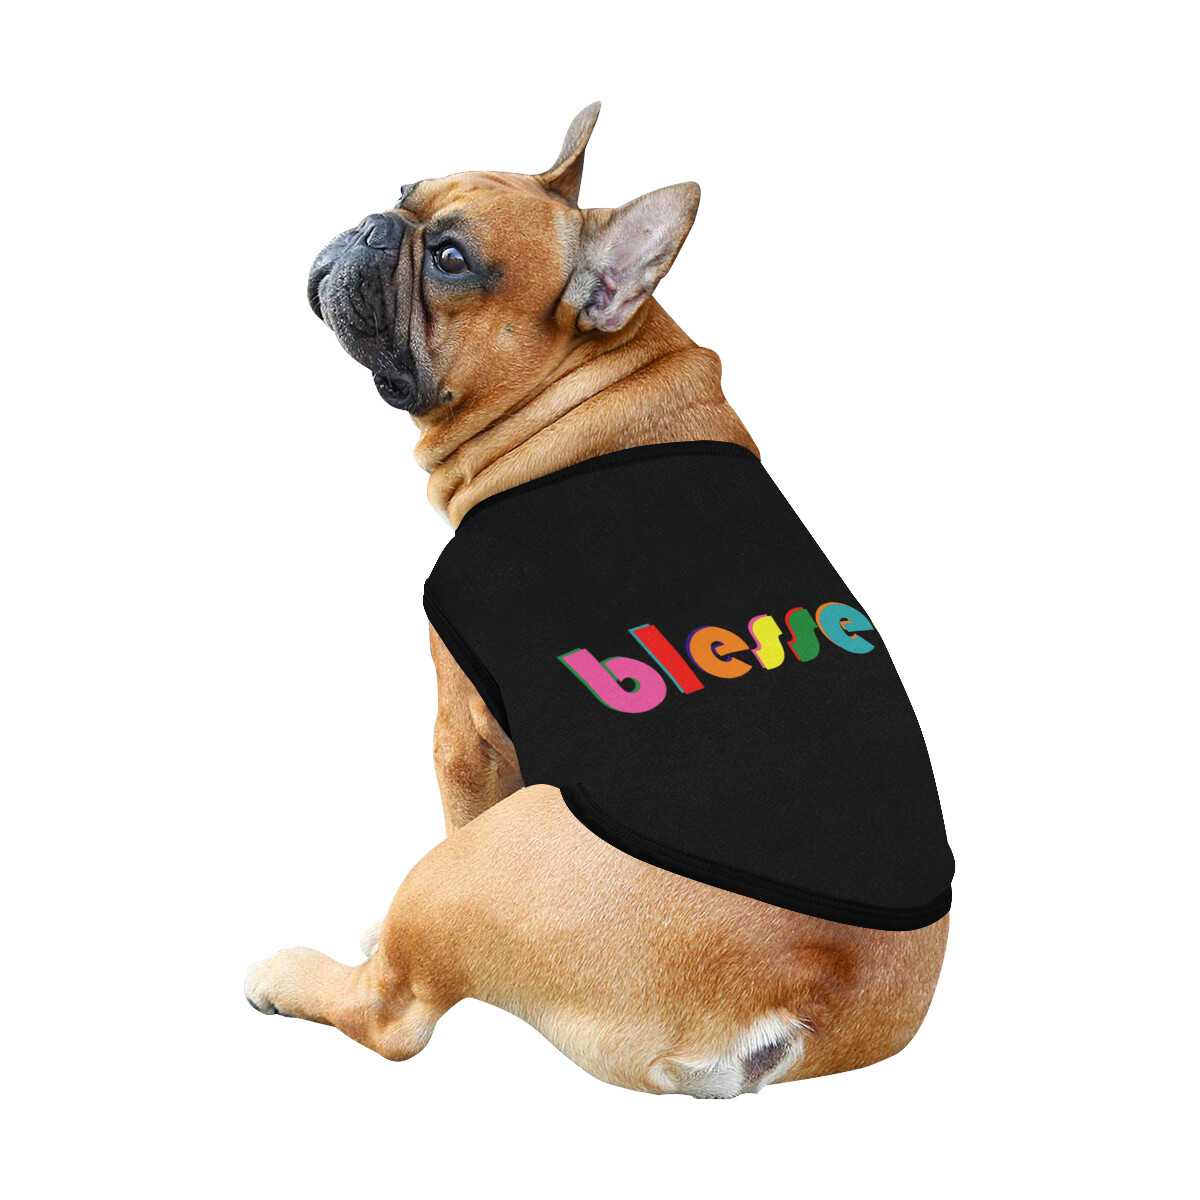 🐕 BLESSED Dog Tank Top, Dog shirt, Dog clothes, Gifts, front back print, 7 sizes XS to 3XL, dog t-shirt, dog t-shirt, dog gift, black